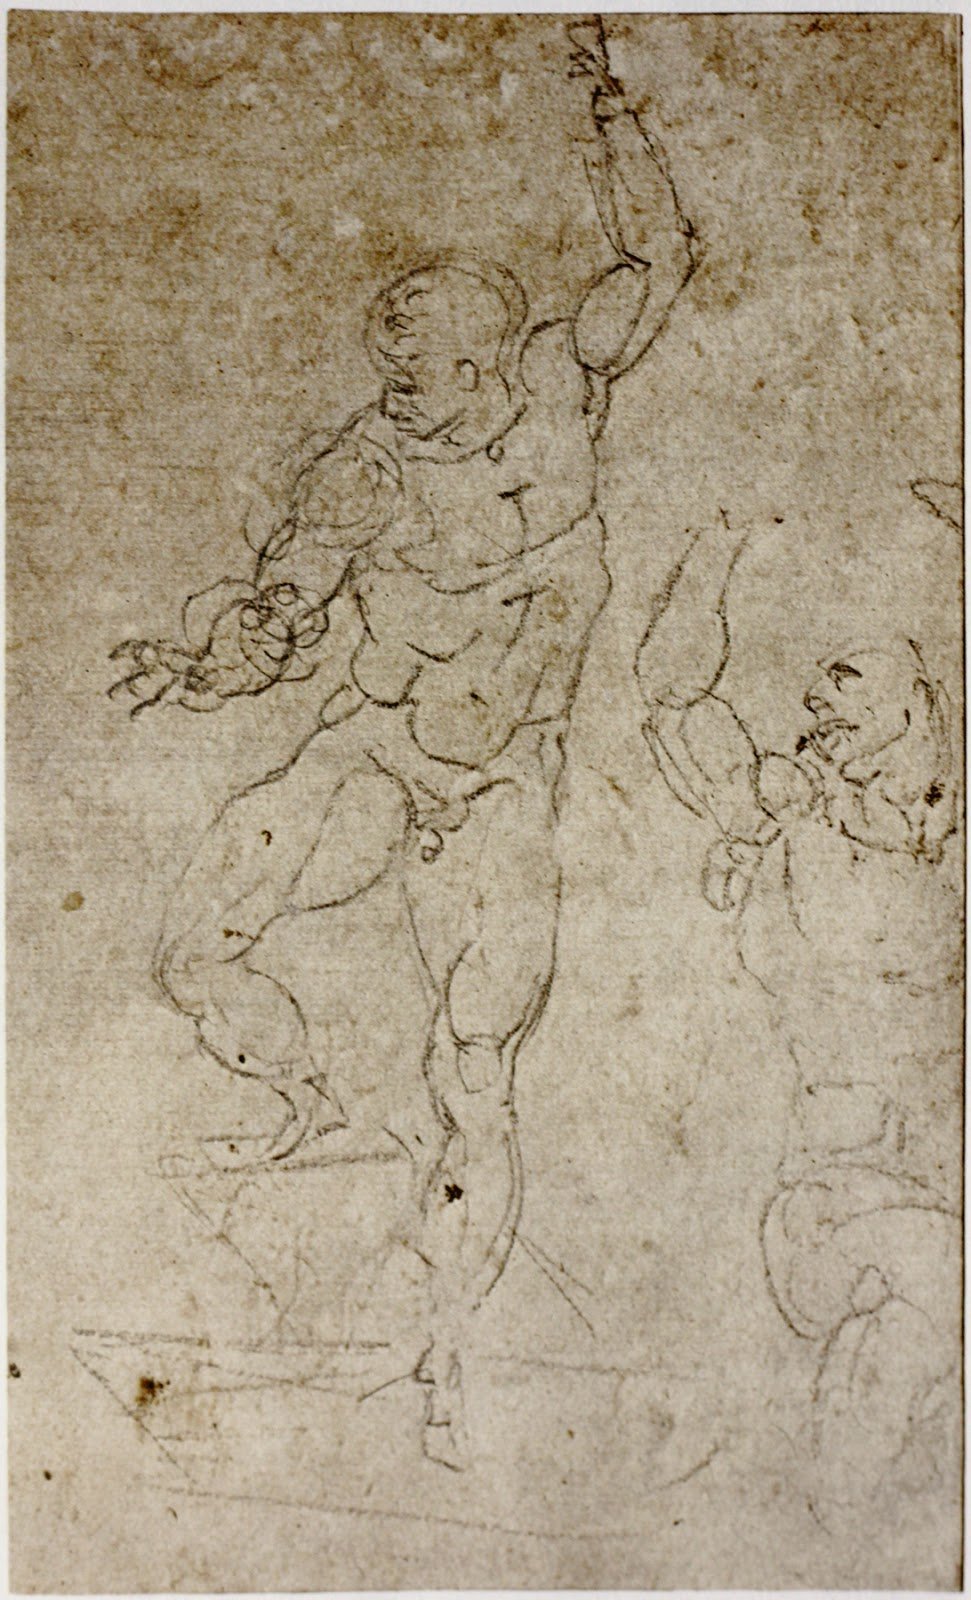 Michelangelo Buonarroti Sketches